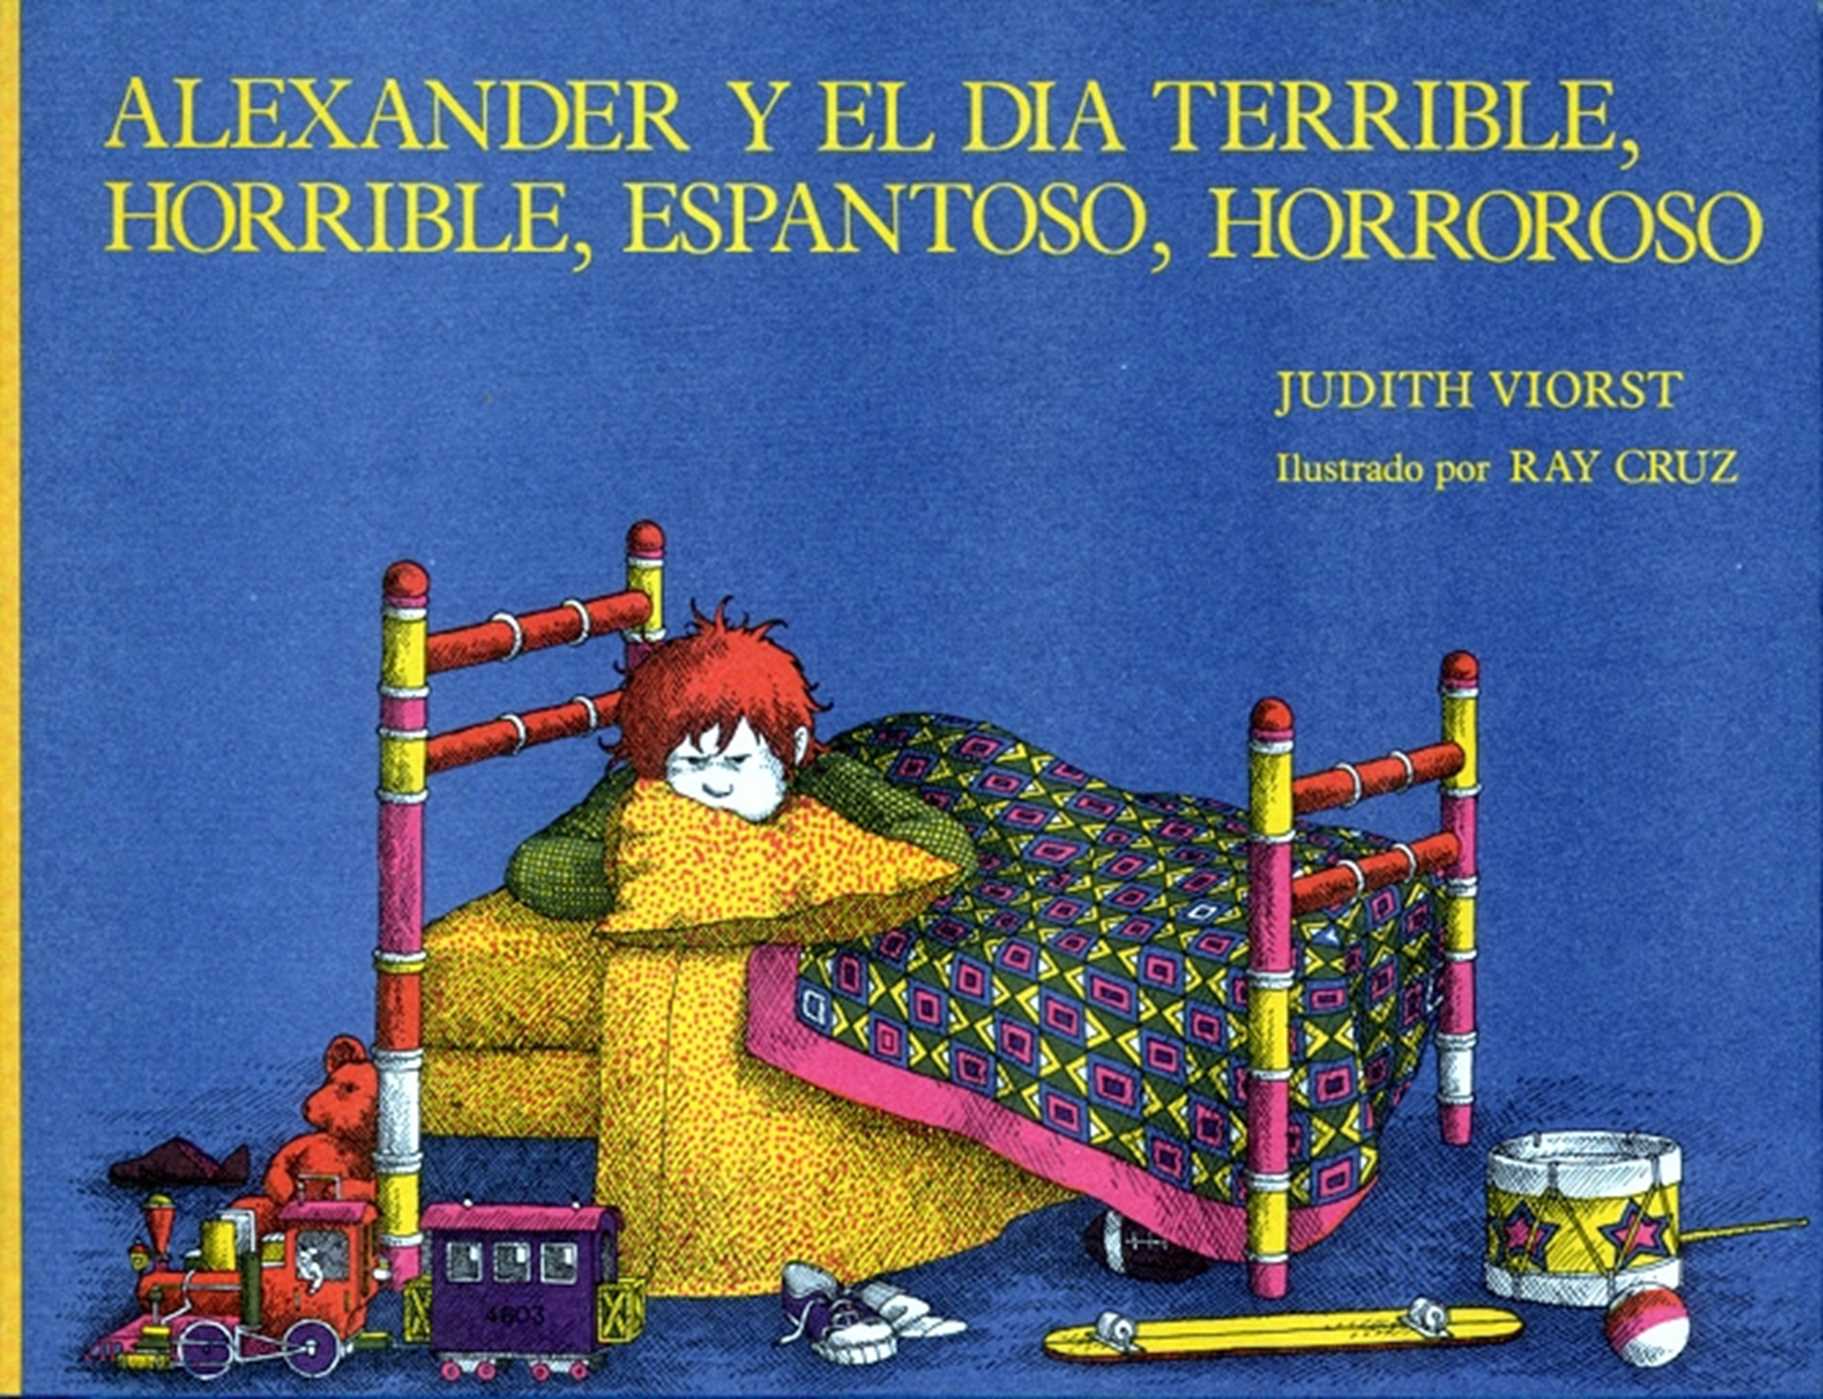 Alexander y el dia terrible, horrible, espantoso, horroroso (Alexander and the Terrible, Horrible, No Good, Very Bad Day) (Hardcover) - image 1 of 1